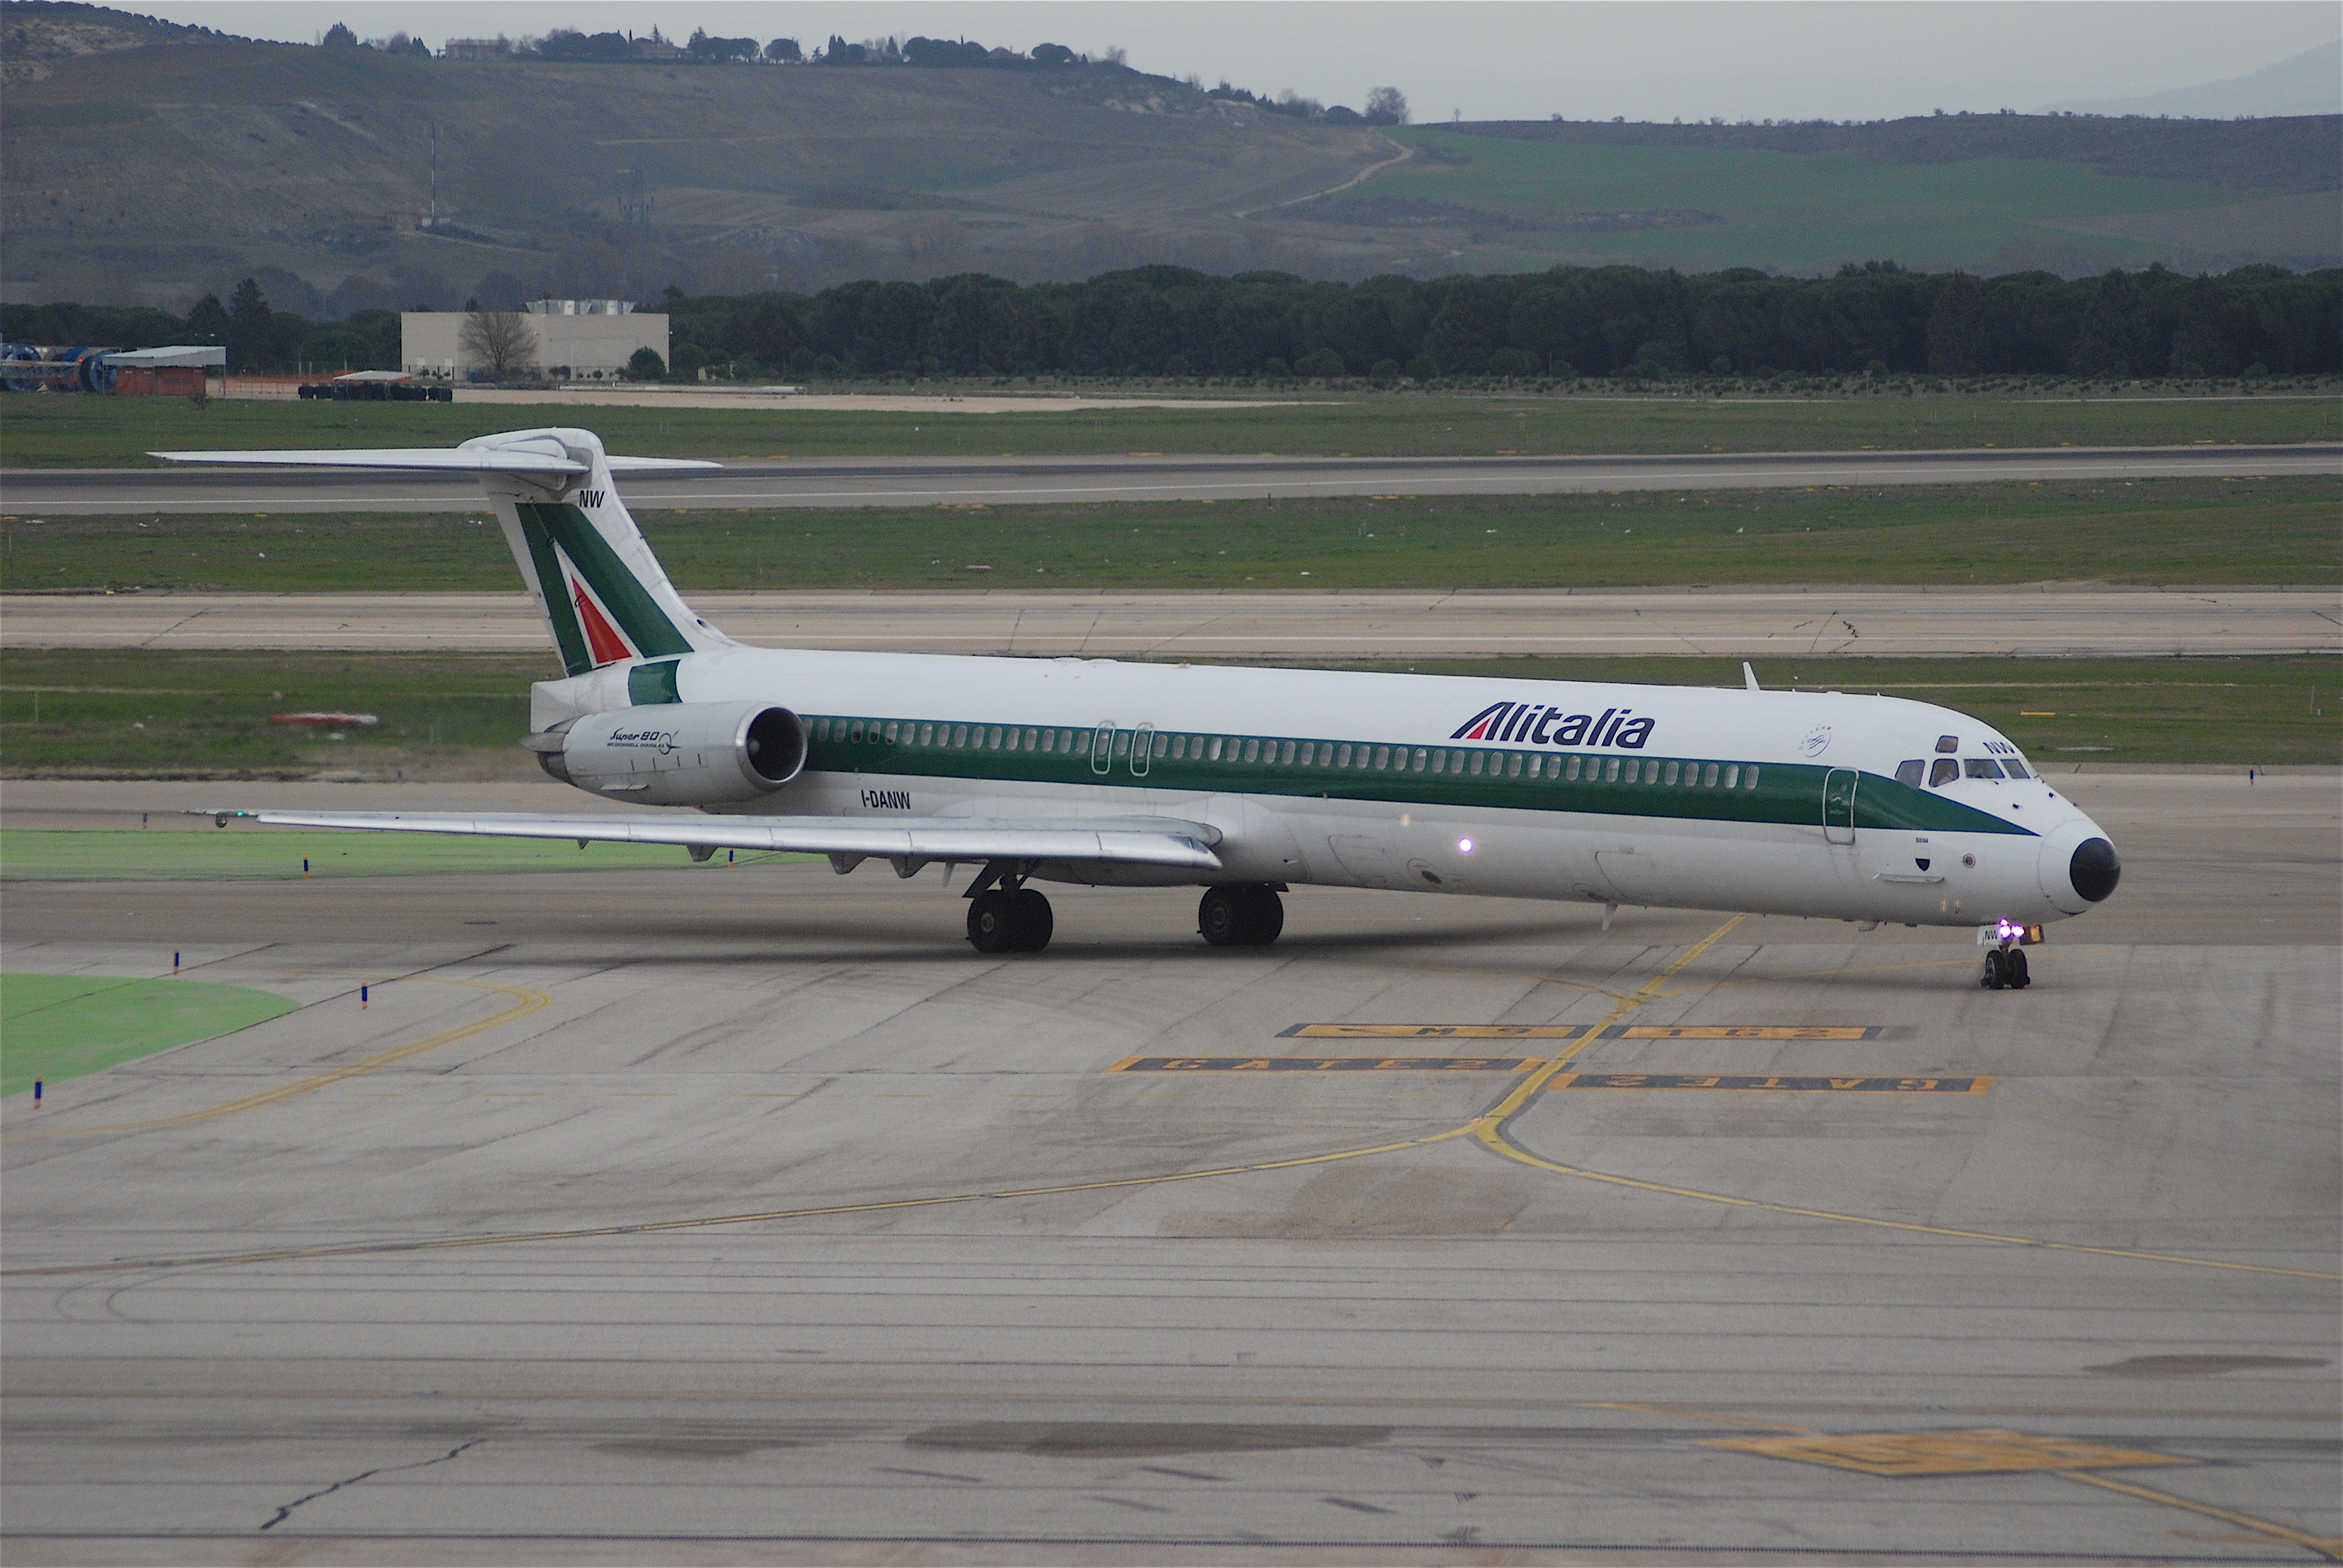 Alitalia_MD-80%2C_I-DANW%40MAD%2C25.02.2007-452ee_-_Flickr_-_Aero_Icarus.jpg